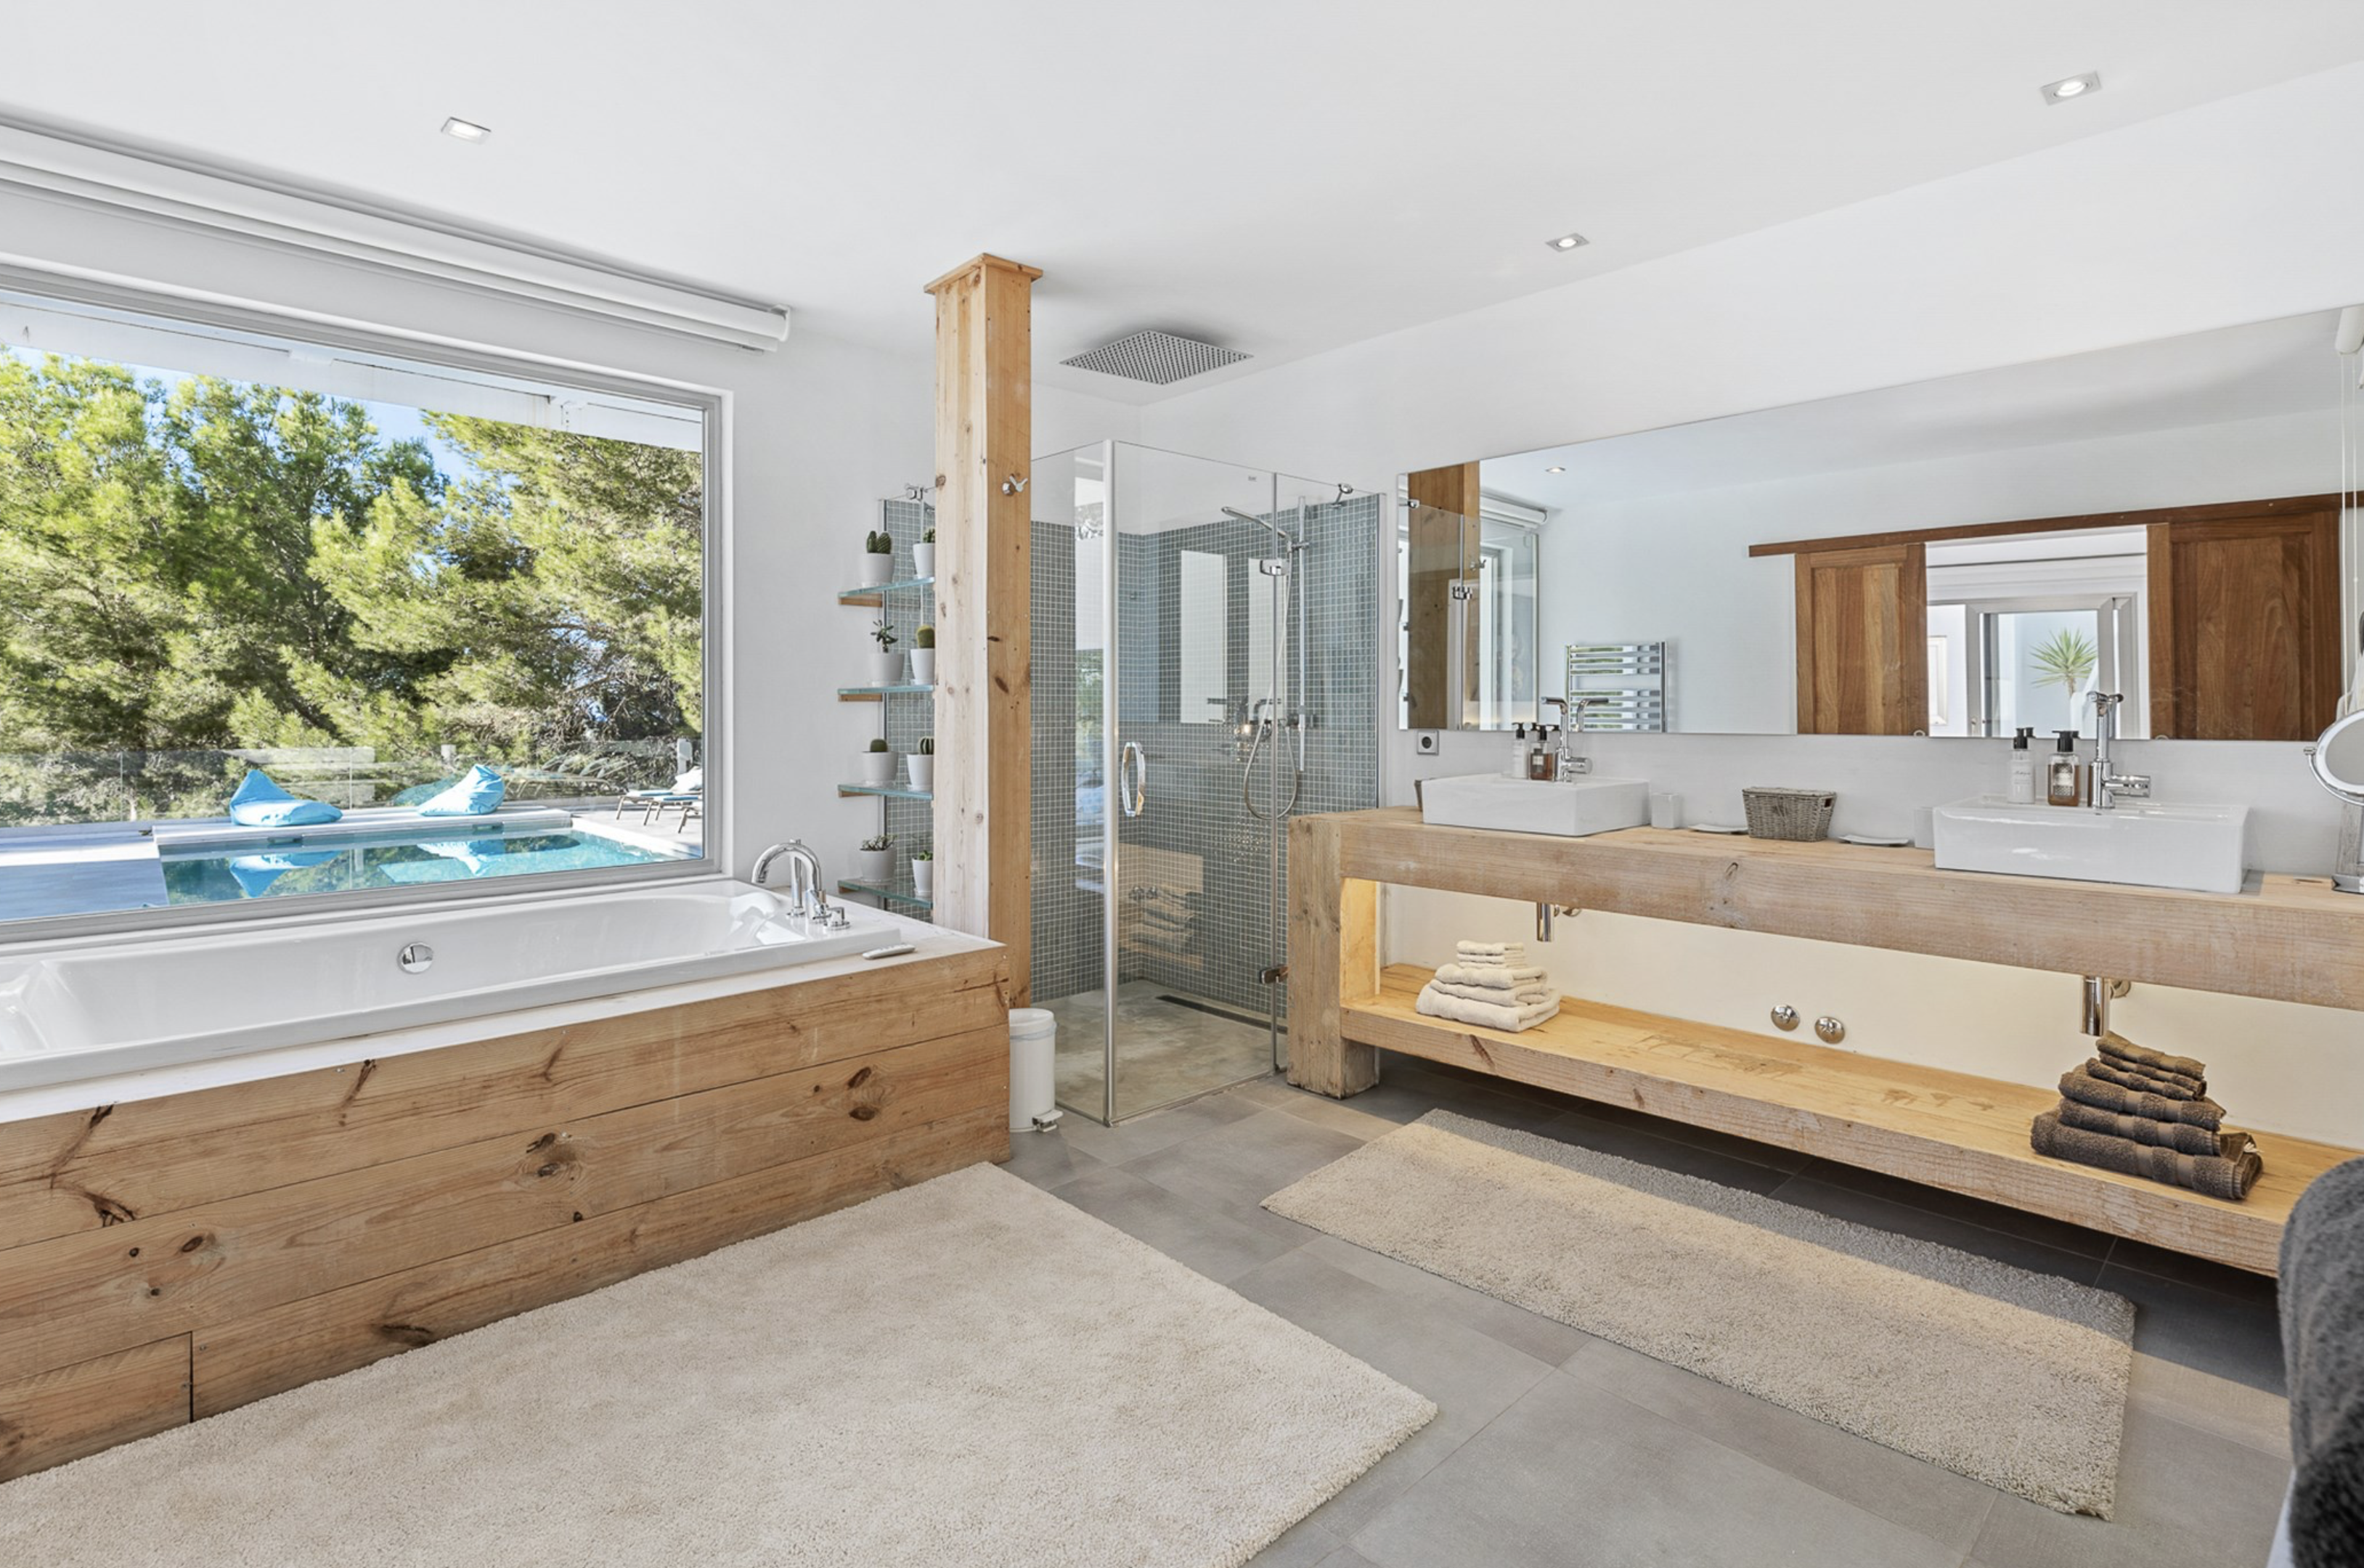 Resa Estates Ivy Cala Tarida Ibiza  luxe woning villa for rent te huur house bedroom 5.png